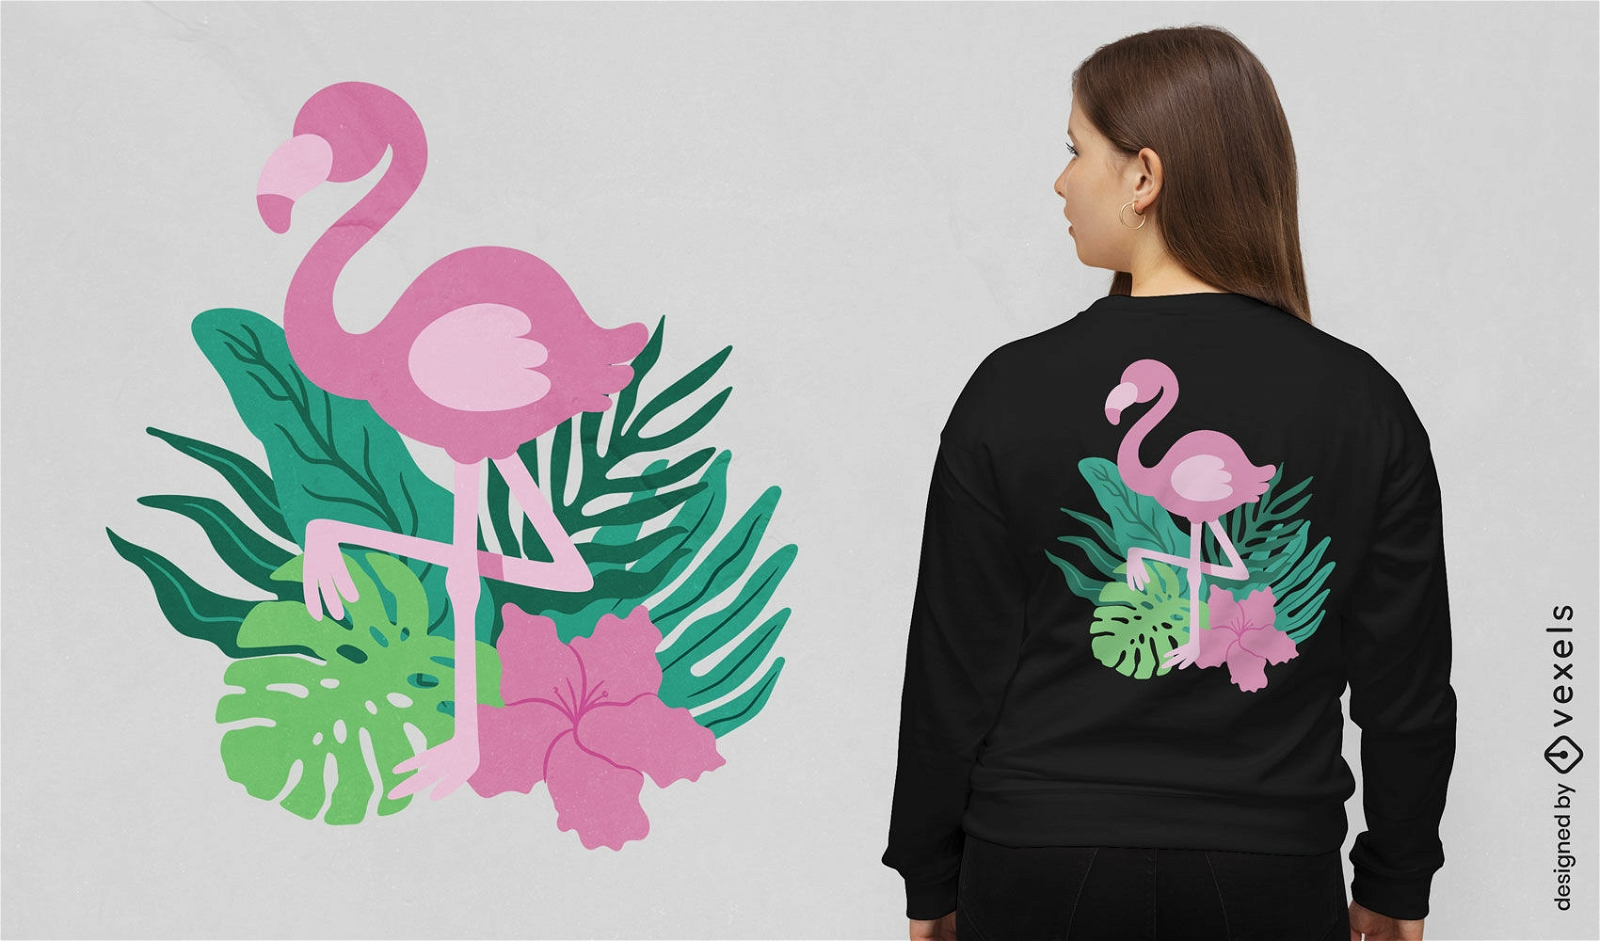 Dise?o de camiseta de flamenco con hojas tropicales.